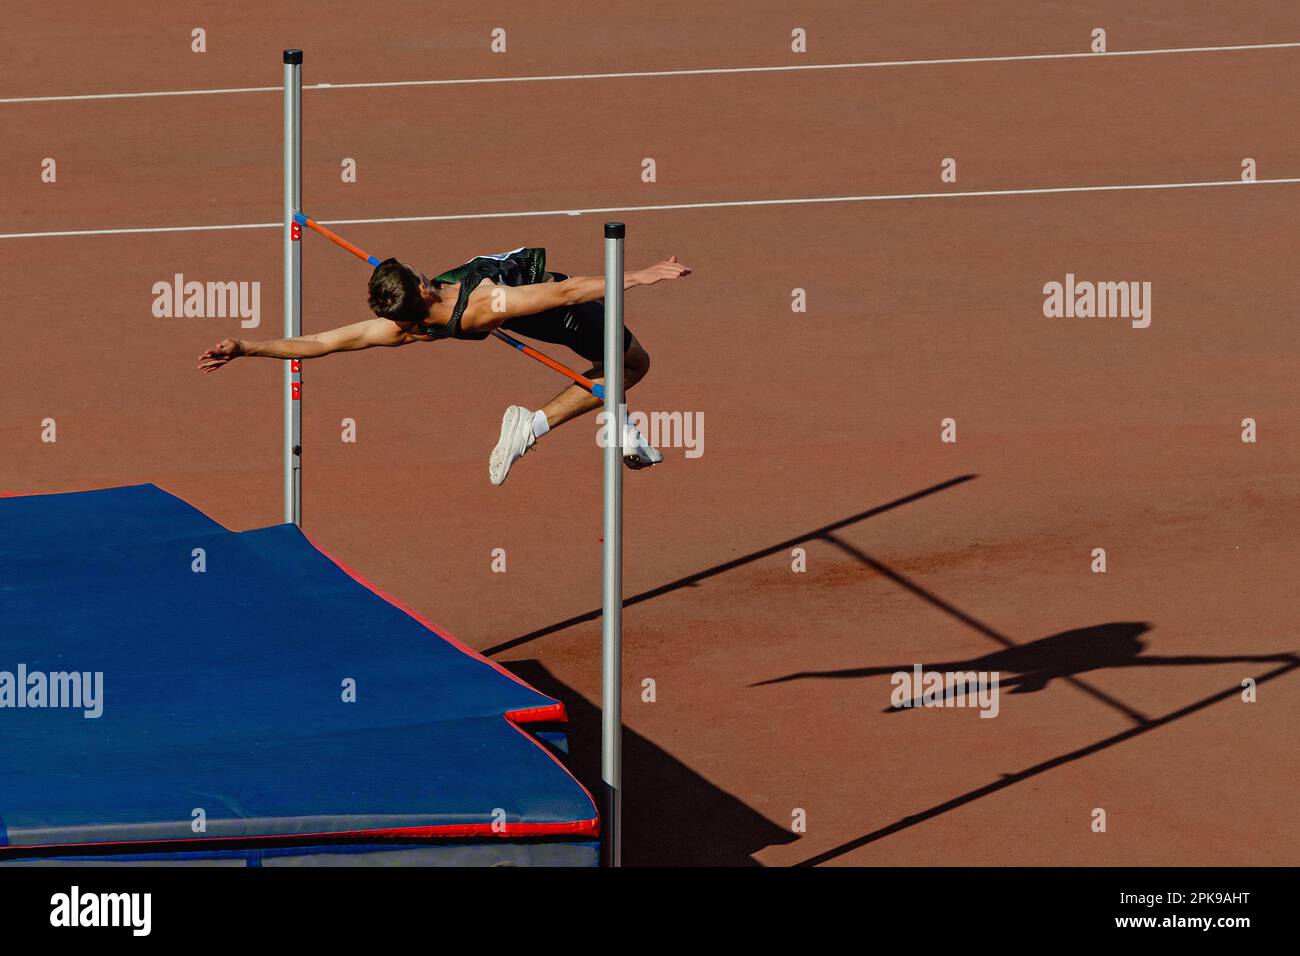 Athleten-Jumper-High-Jump im Sommer-Sport-Wettkampf, Silhouette-High-Jumper auf rotem Track-Stadion Stockfoto